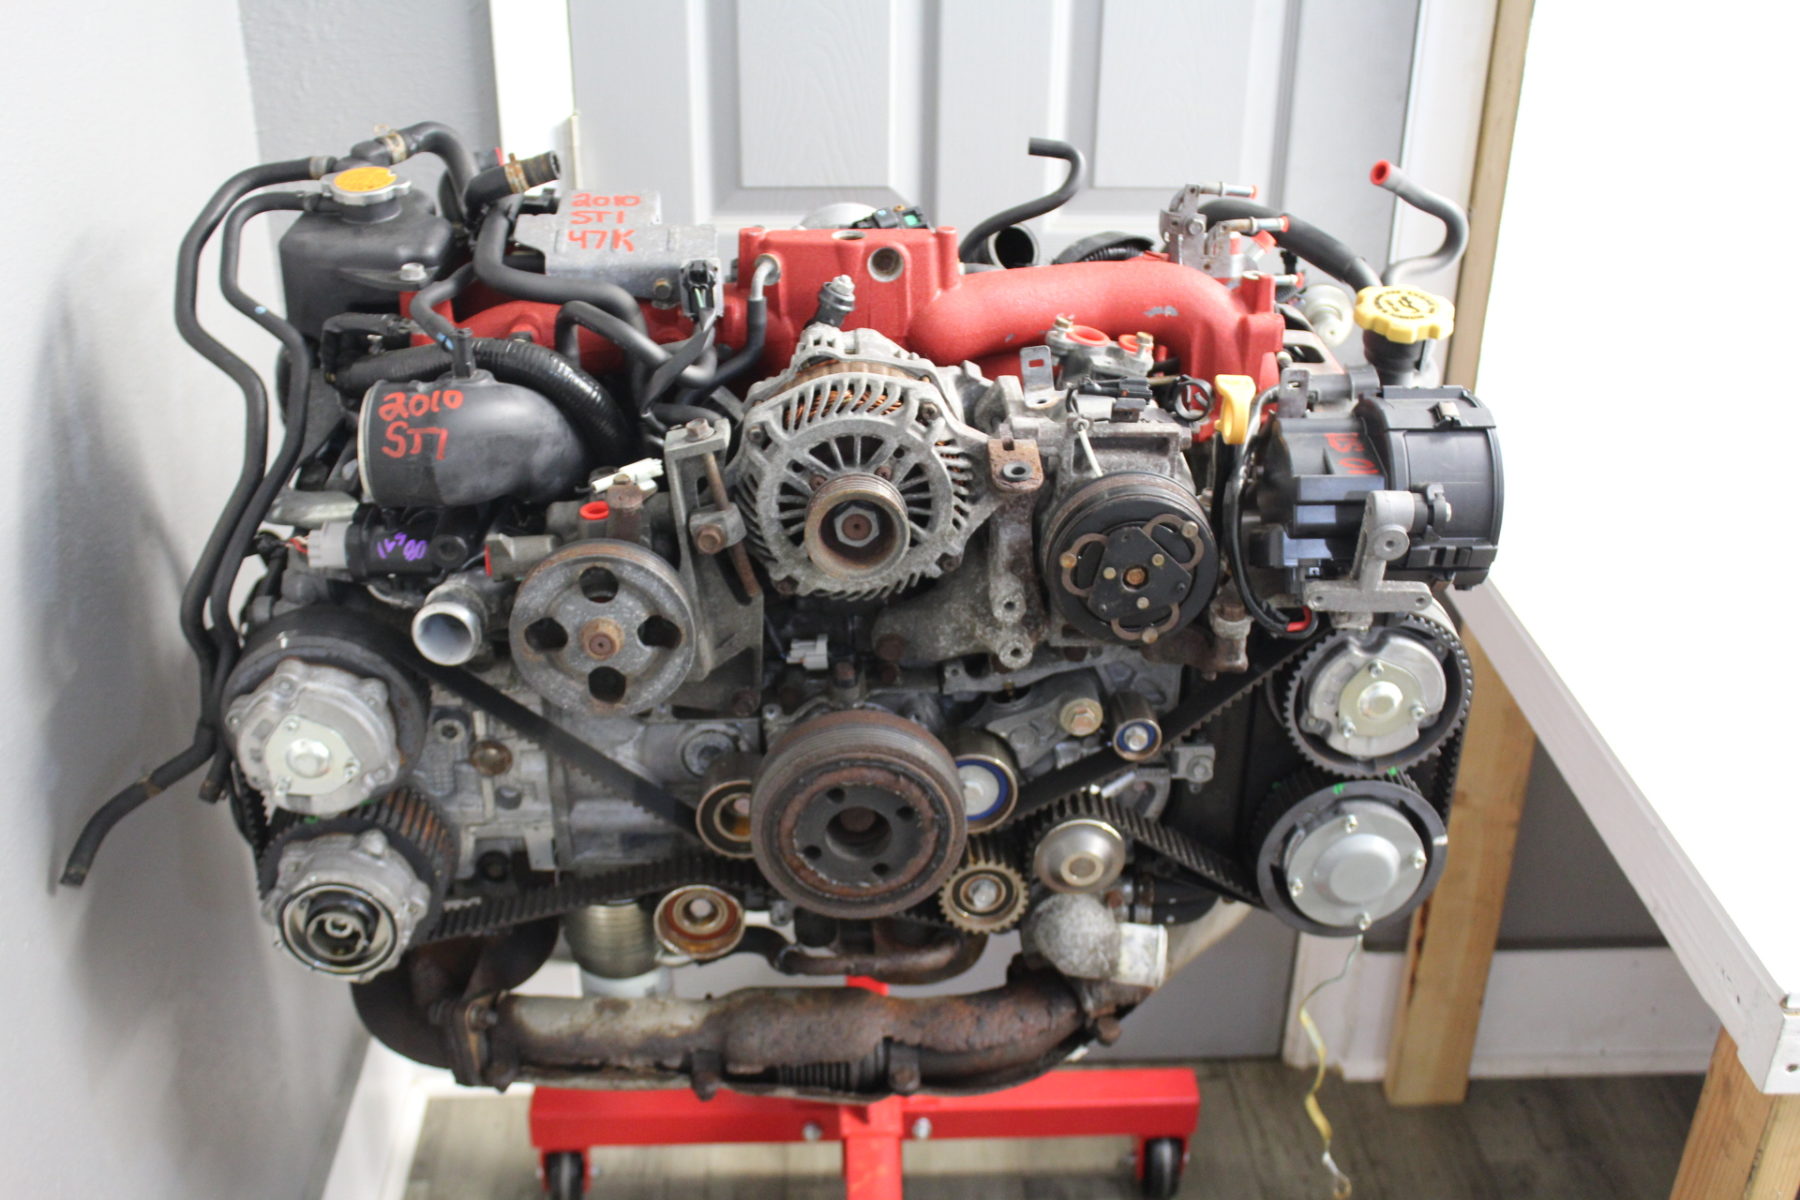 08 19 Subaru Wrx Sti Engine Long Block Assembly 2 5l Turbo Ej257 47k Miles Subieautoparts Com